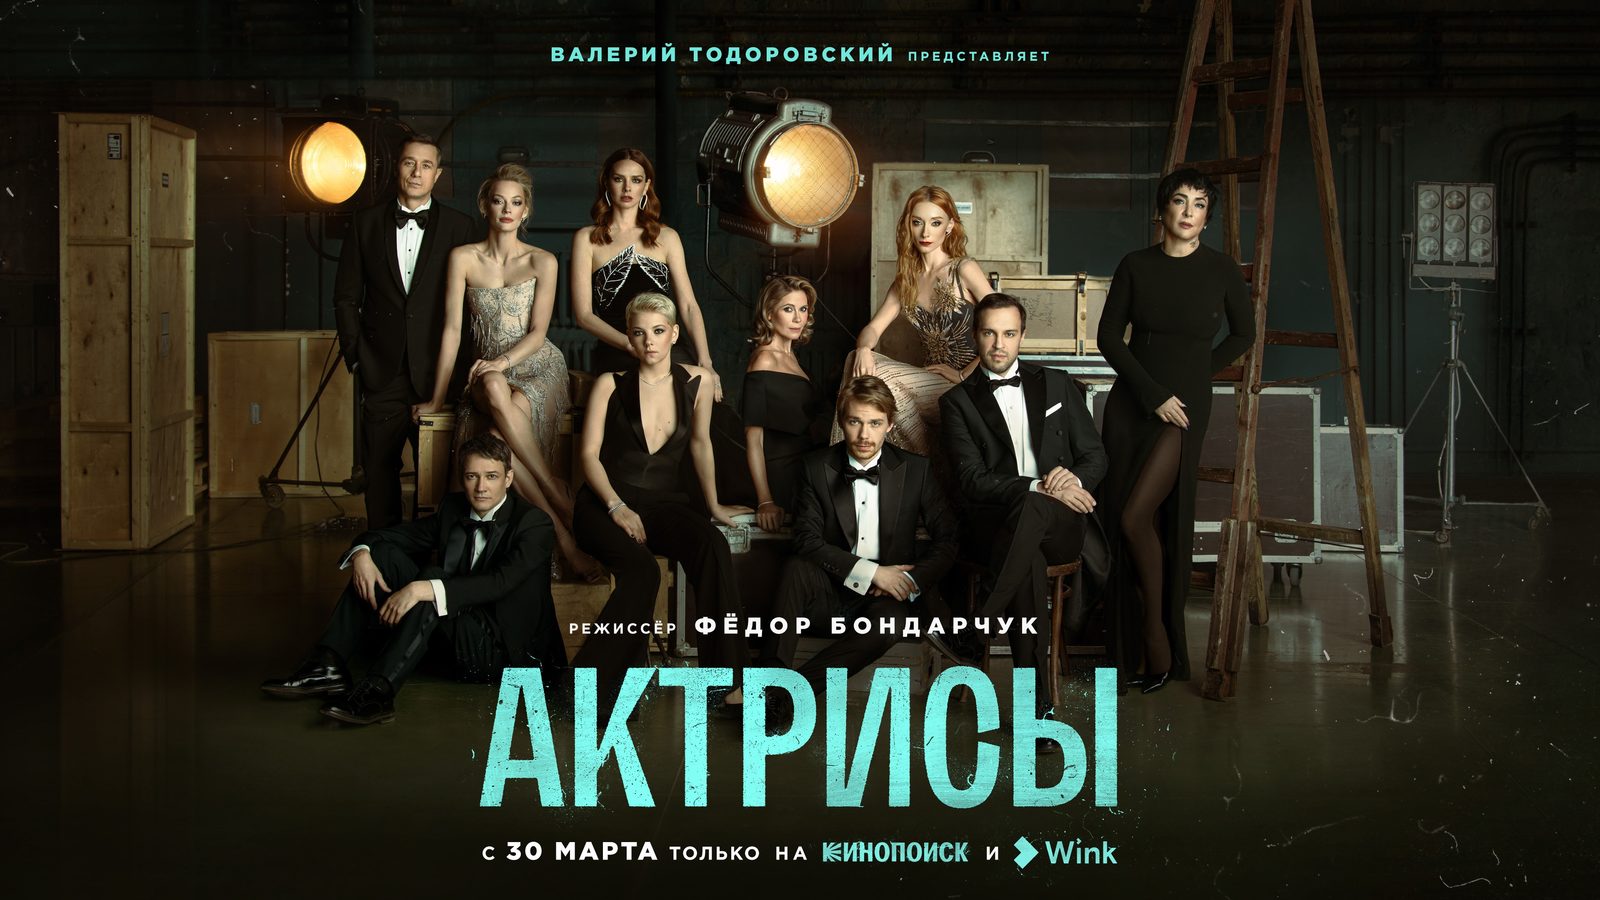 «Актрисы» Бондарчука выйдут на сцену 30 марта